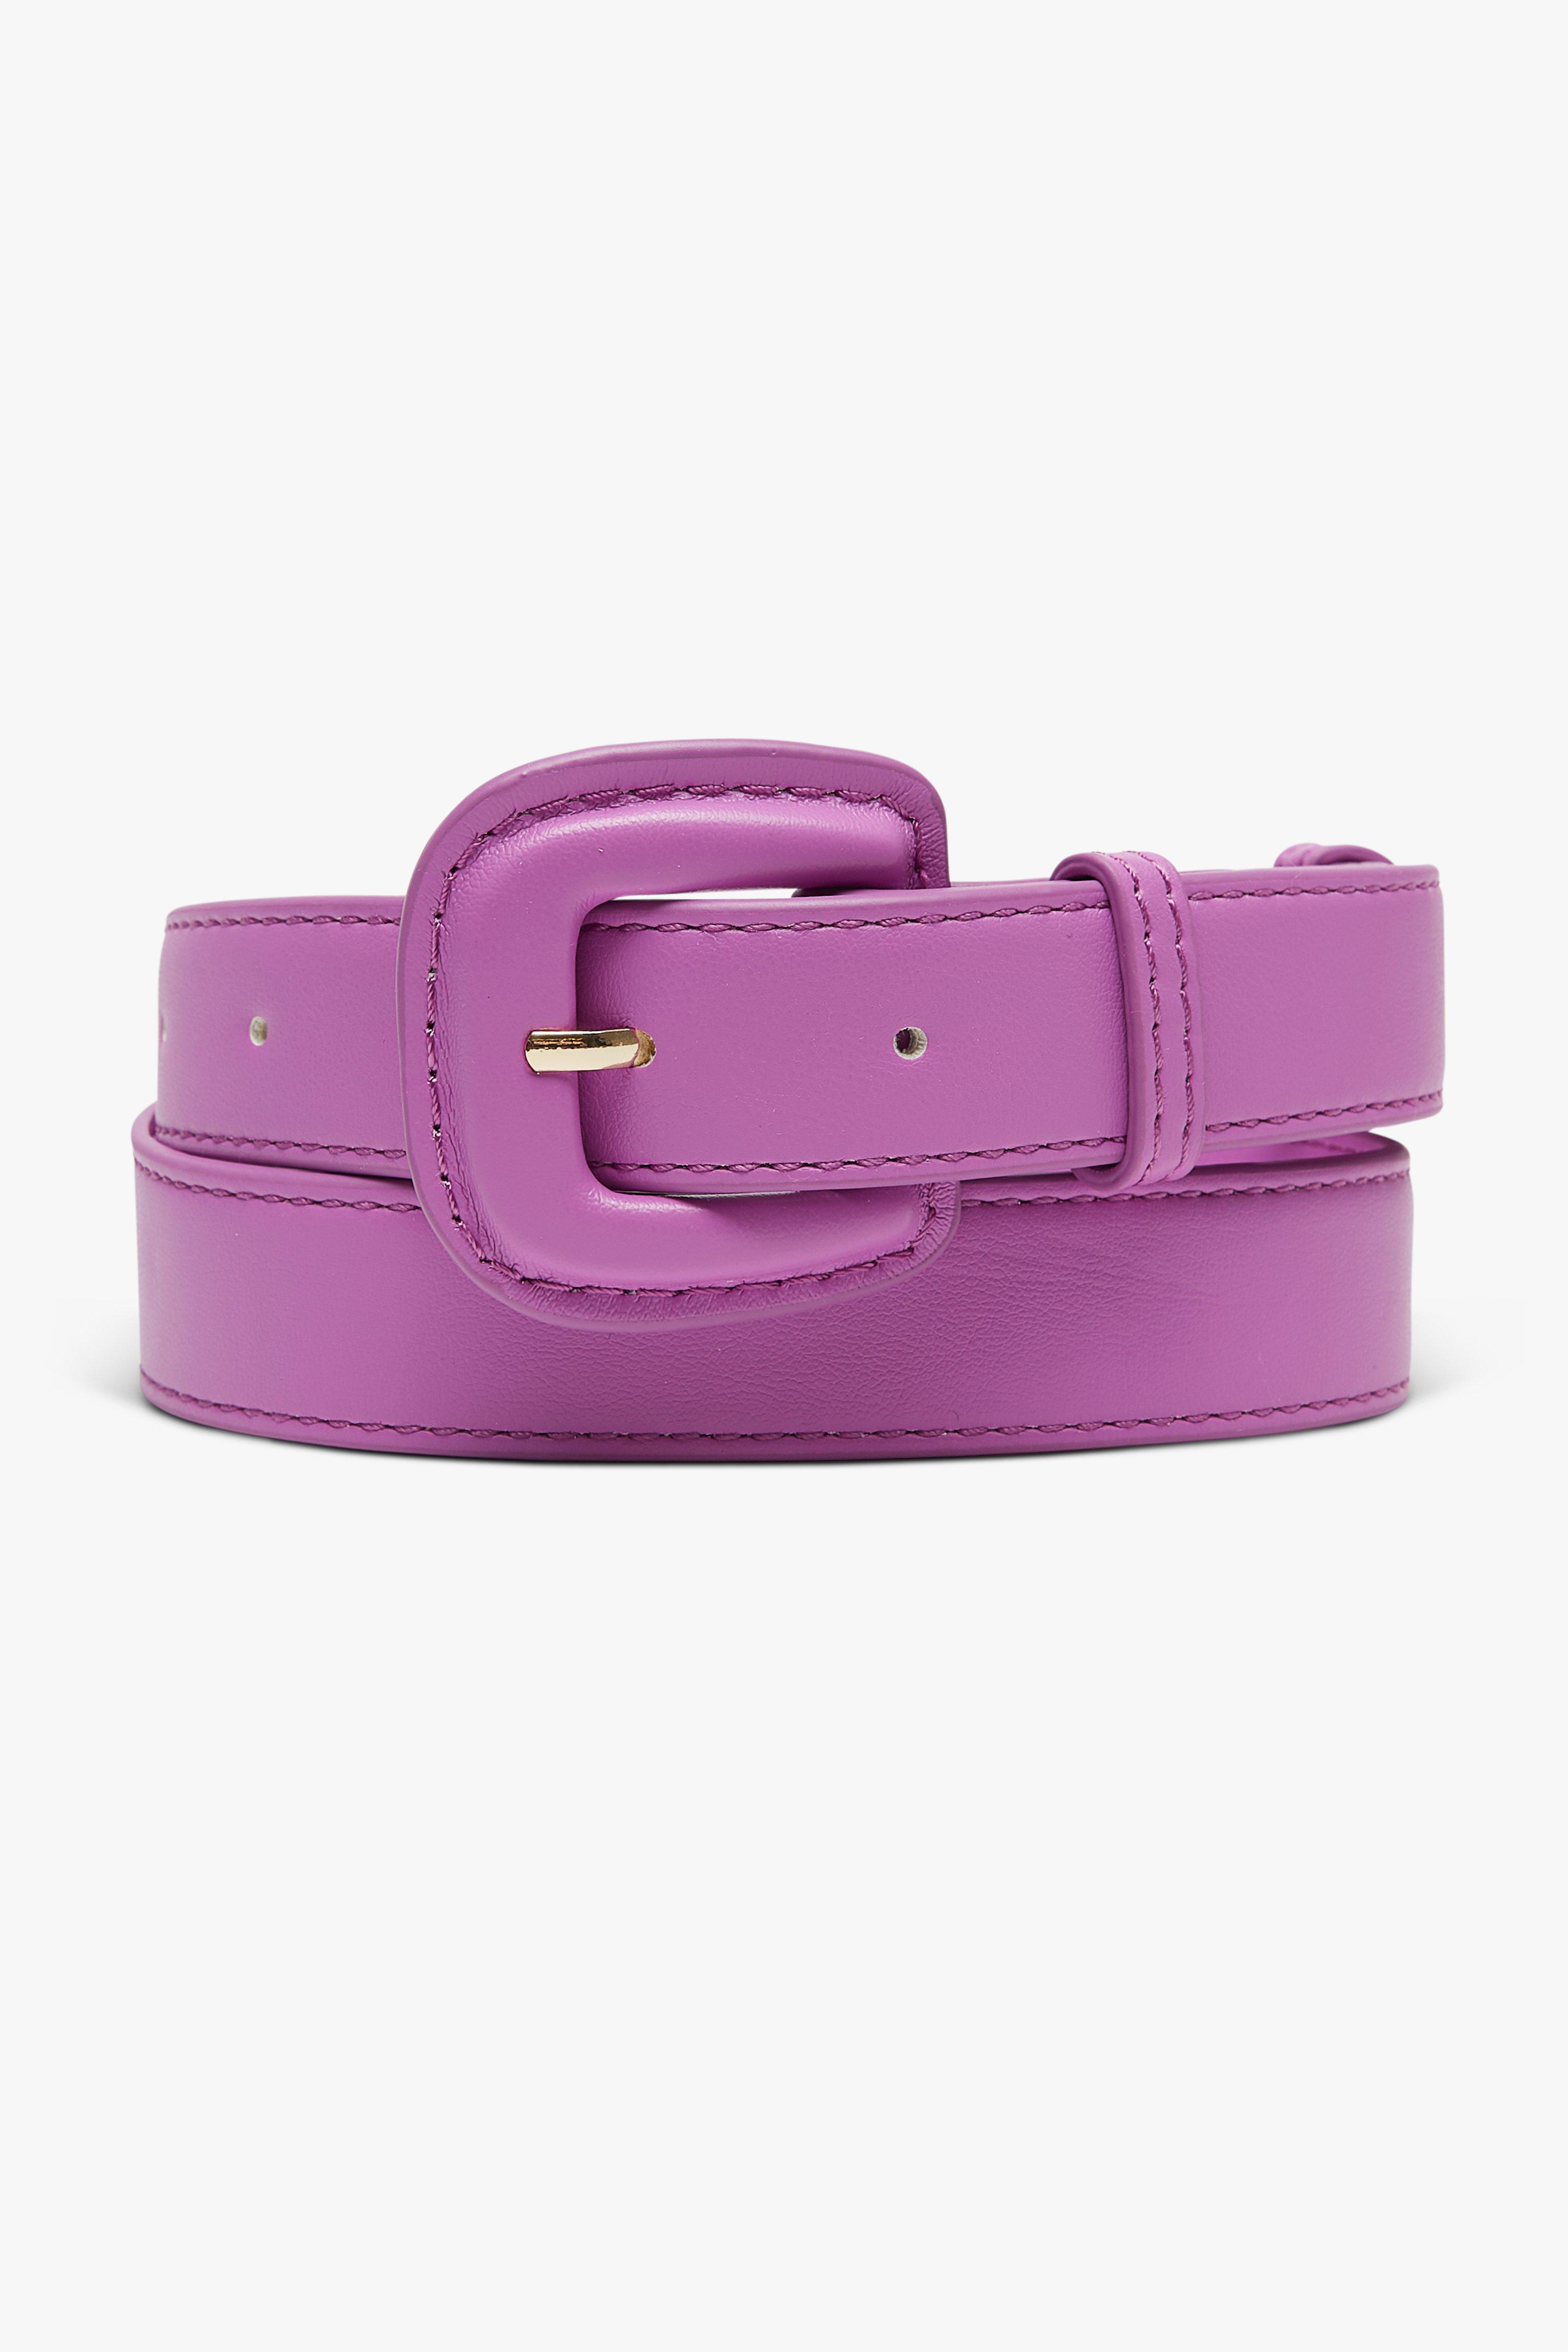 Cks fashion 85cm Purple Narrow Belt